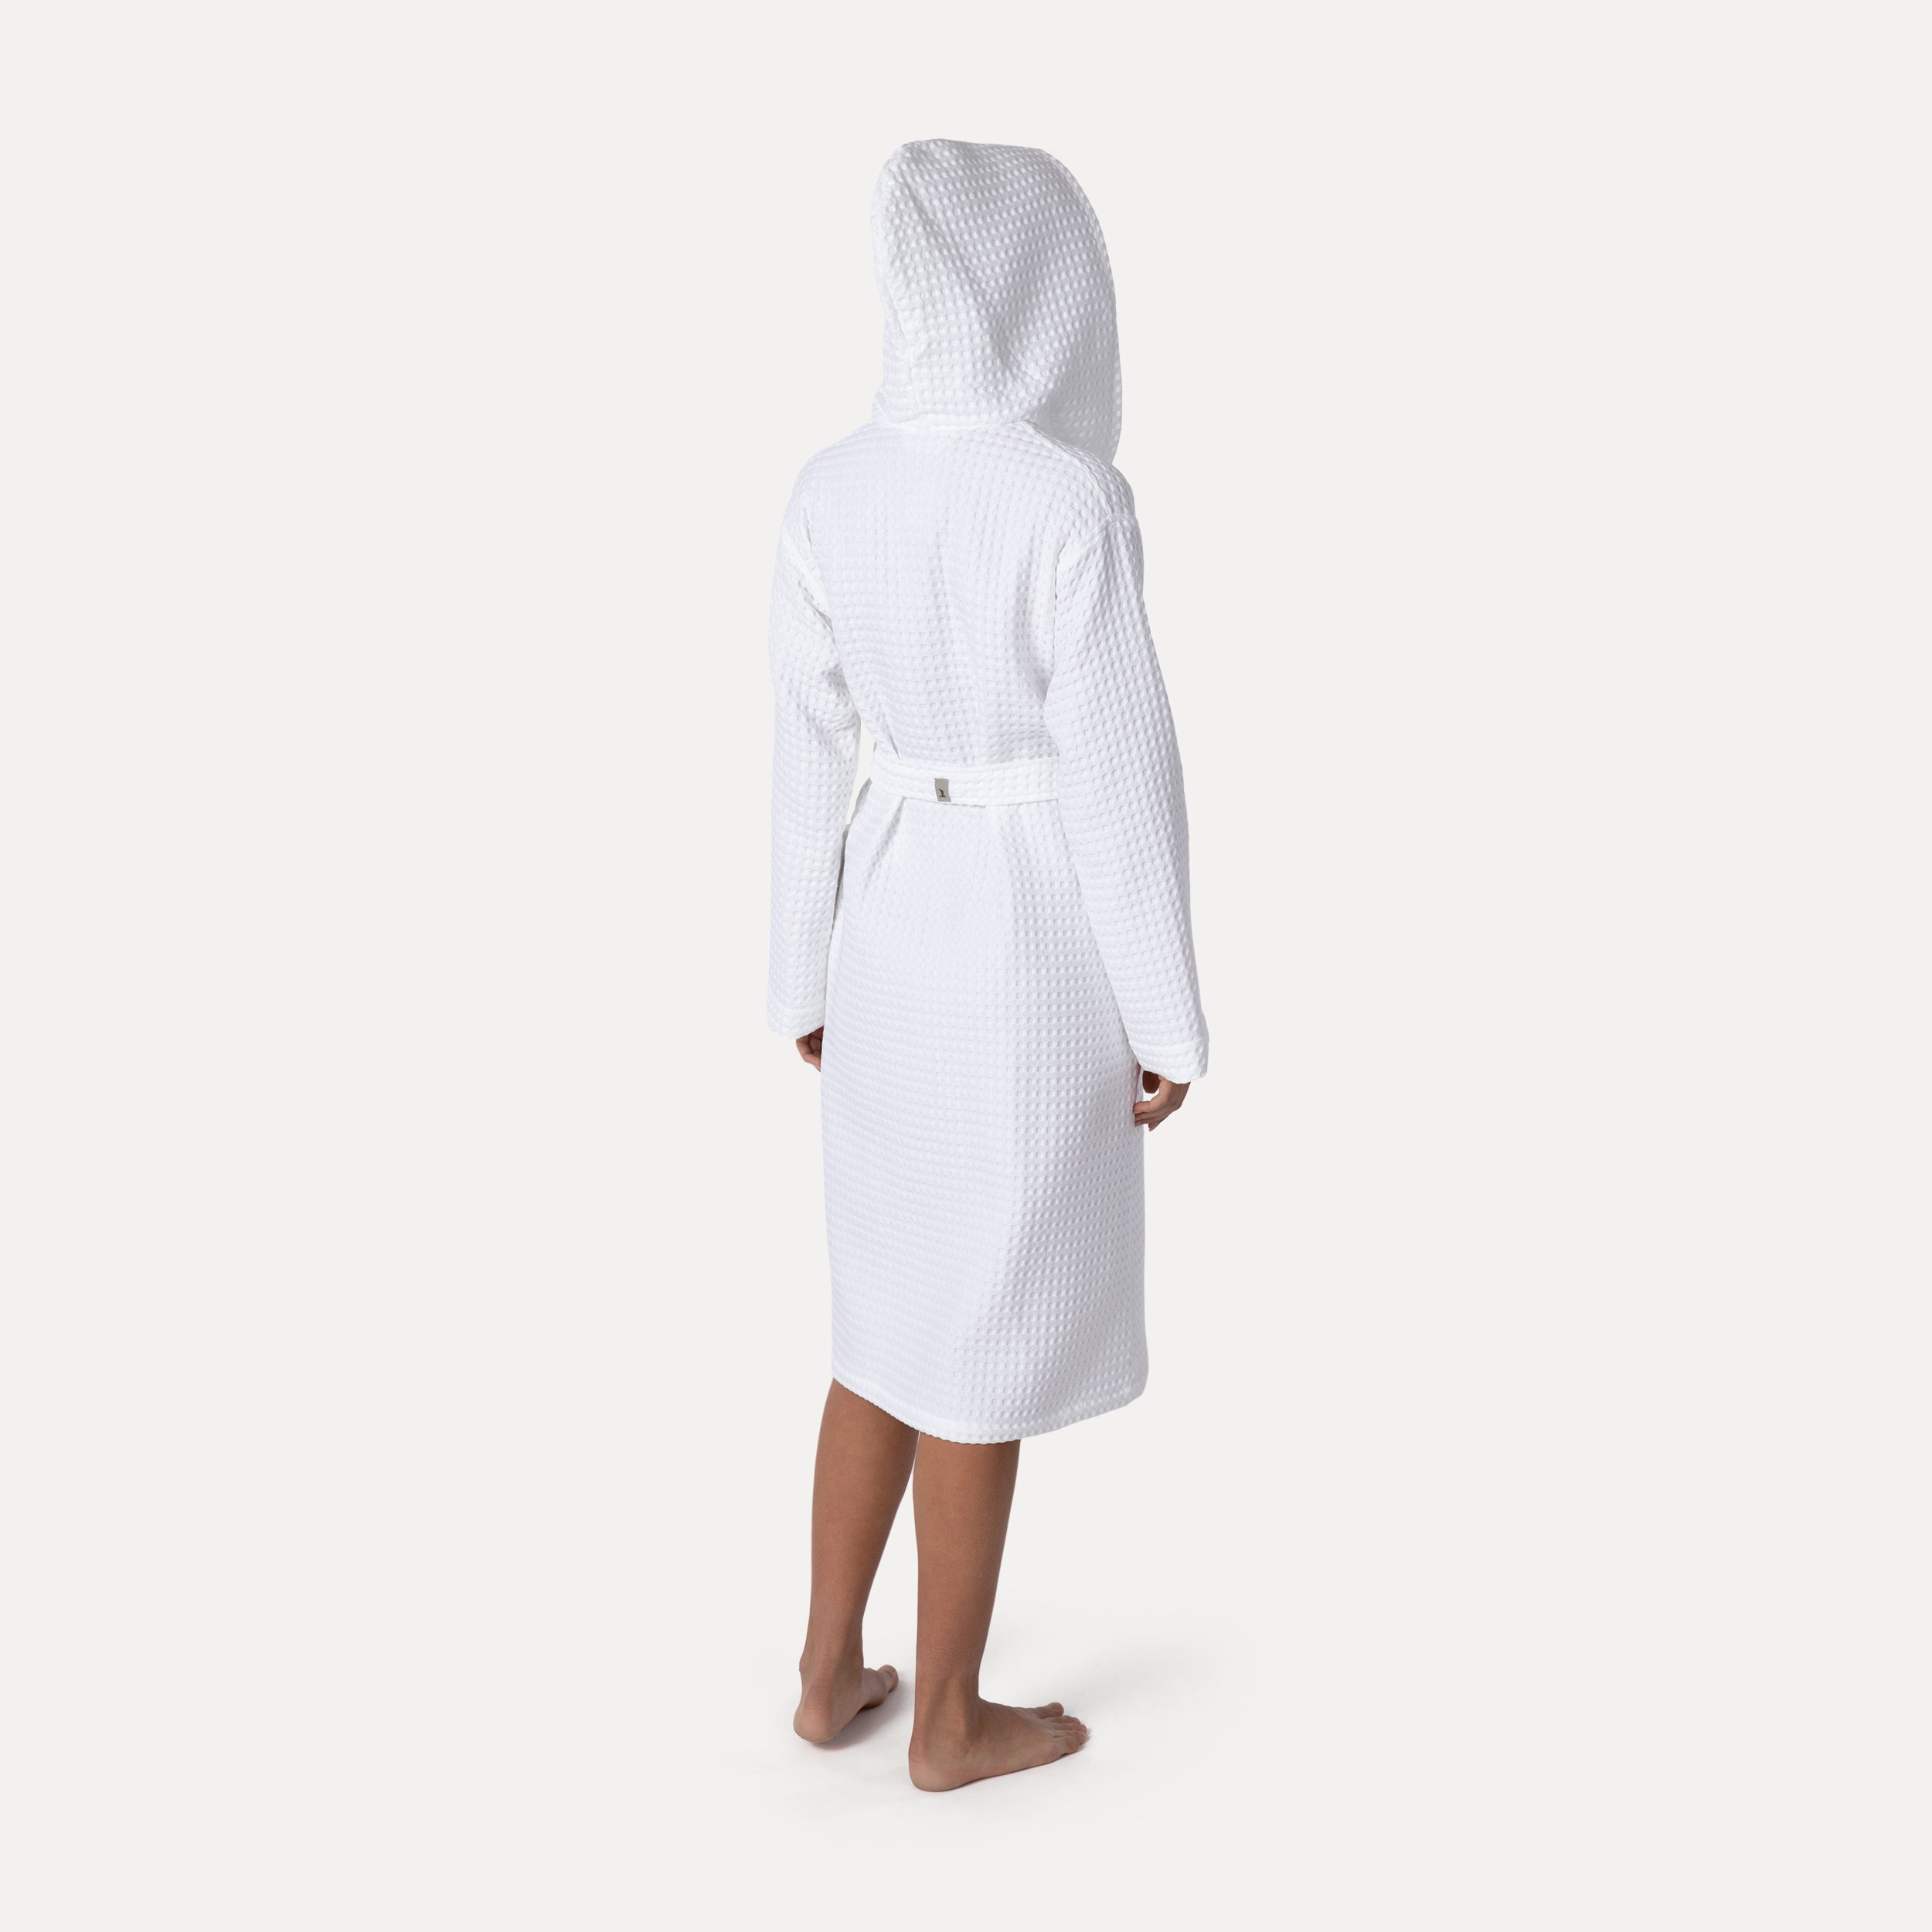 MÖVE Superwuschel hooded bathrobe snow white (snow)